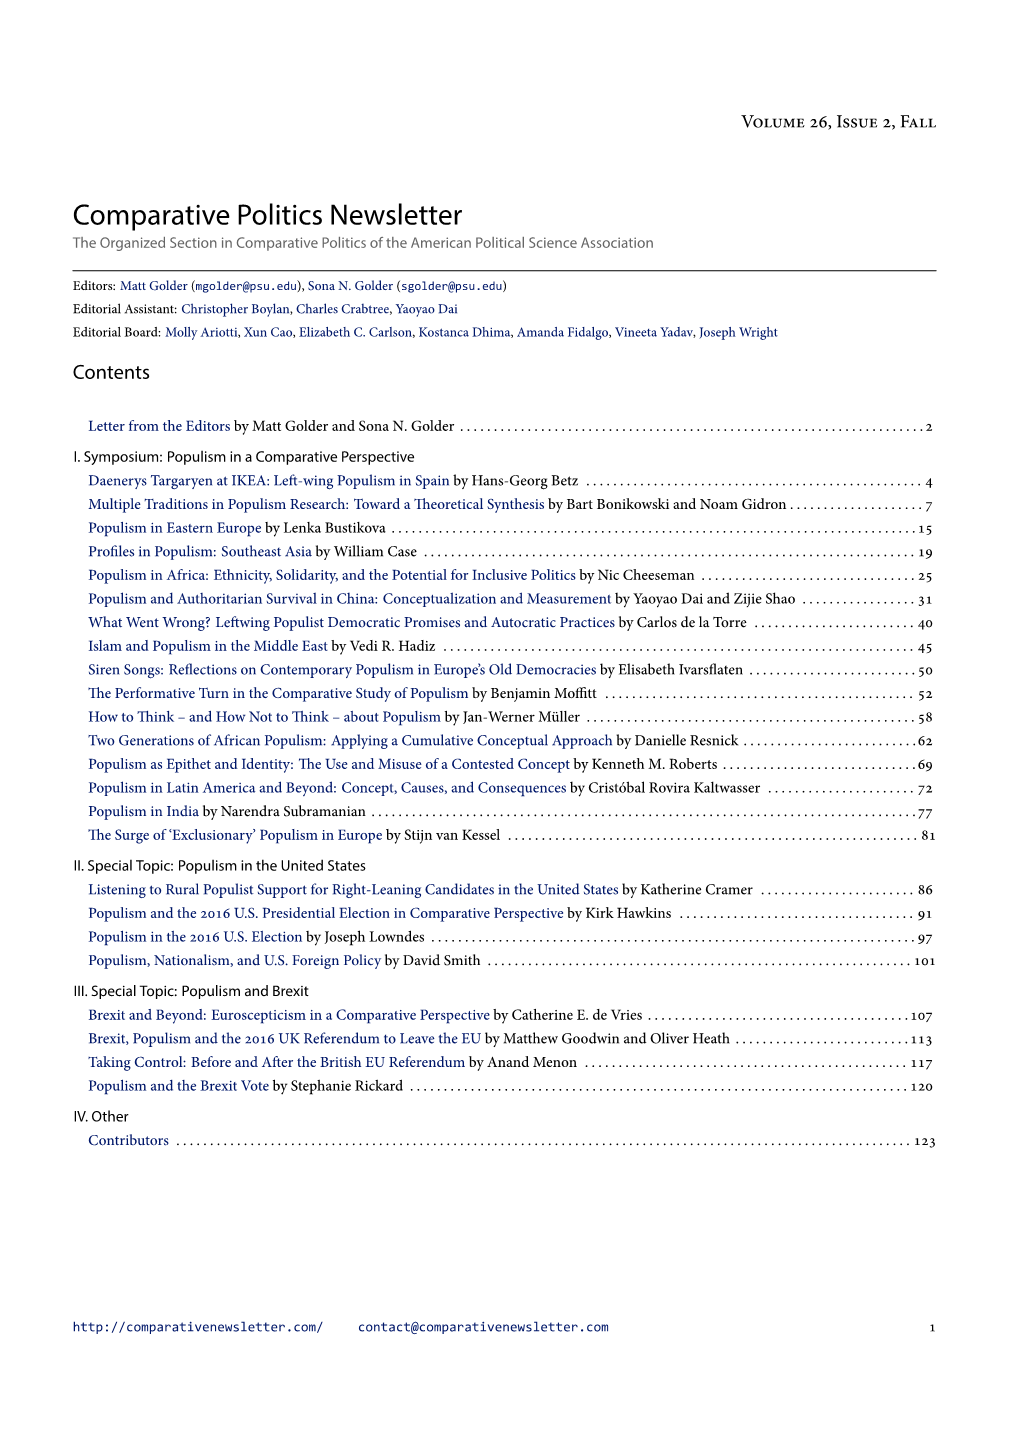 Comparative Politics Newsletter the Organized Section in Comparative Politics of the American Political Science Association